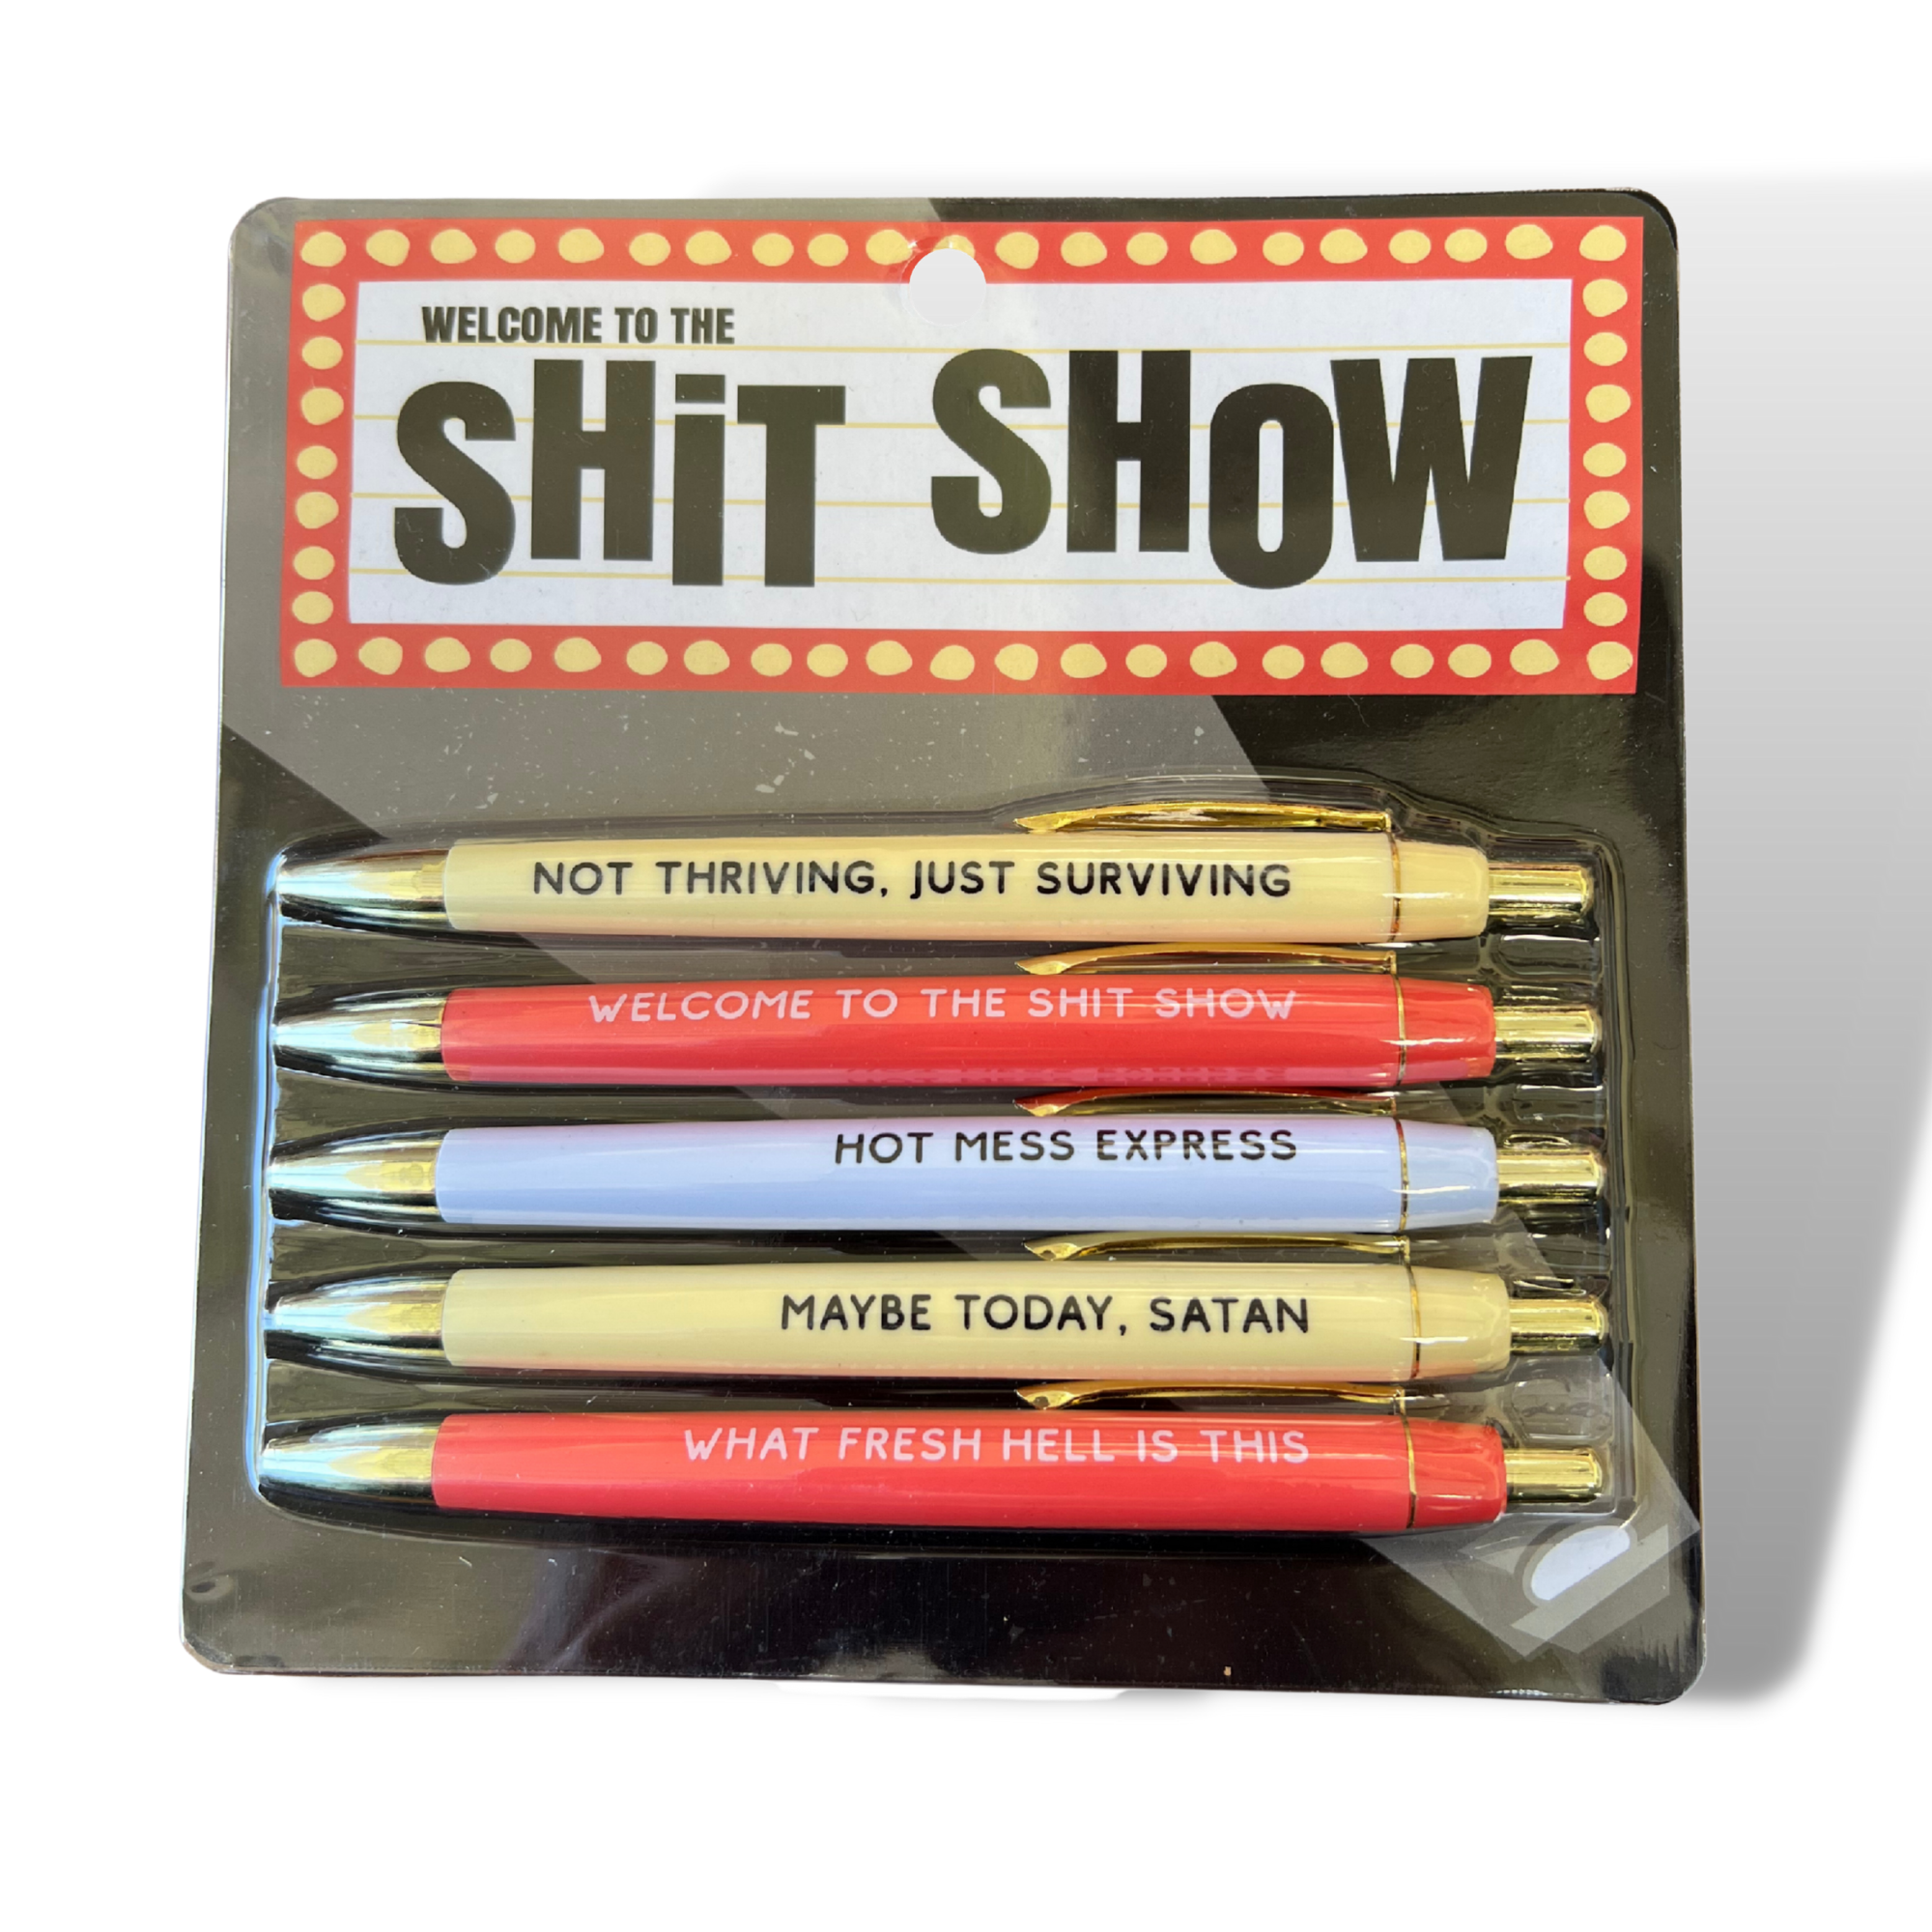 Sweary Fuck Pens Cussing Pen Gift Set - 5 Multicolored Gel Pens Rife w –  The Bullish Store